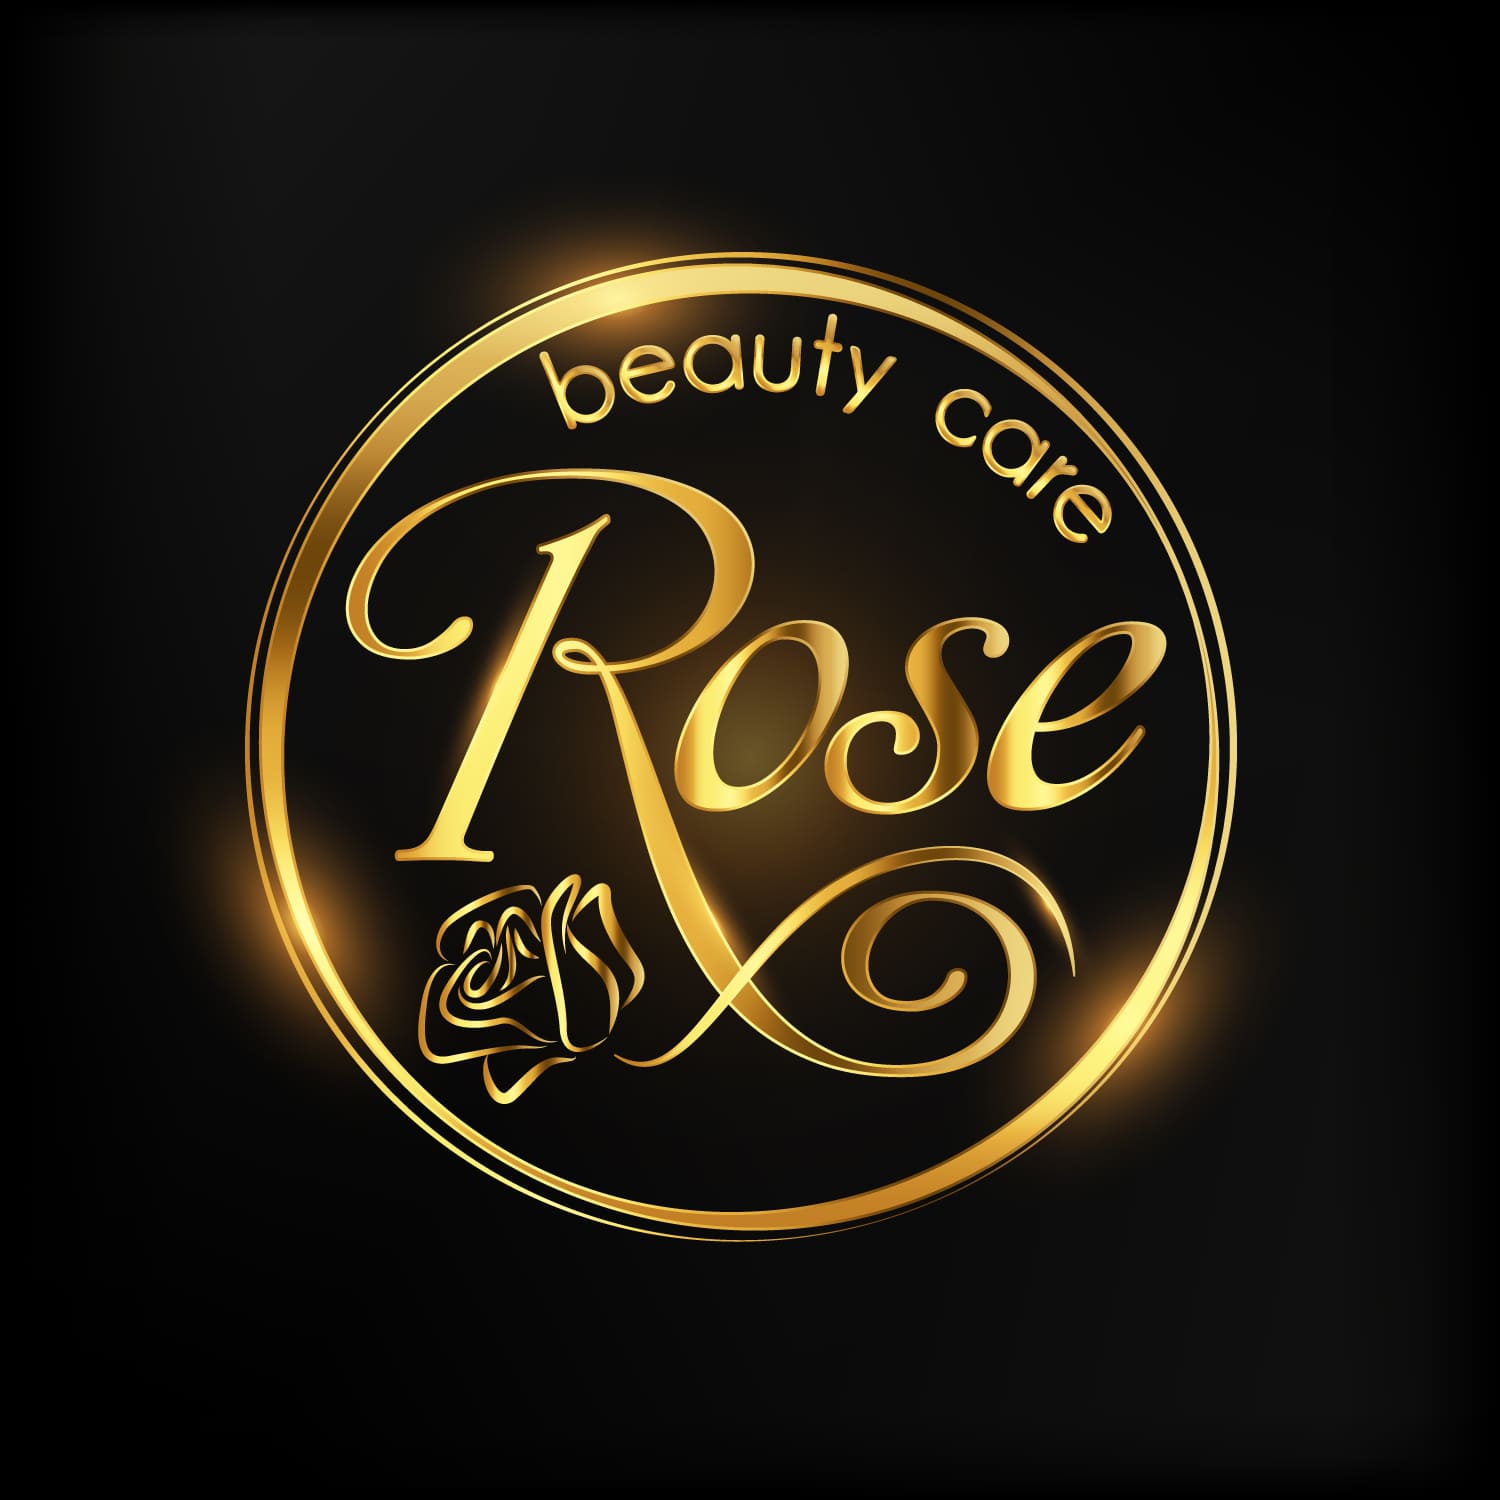 logo rose beauty care